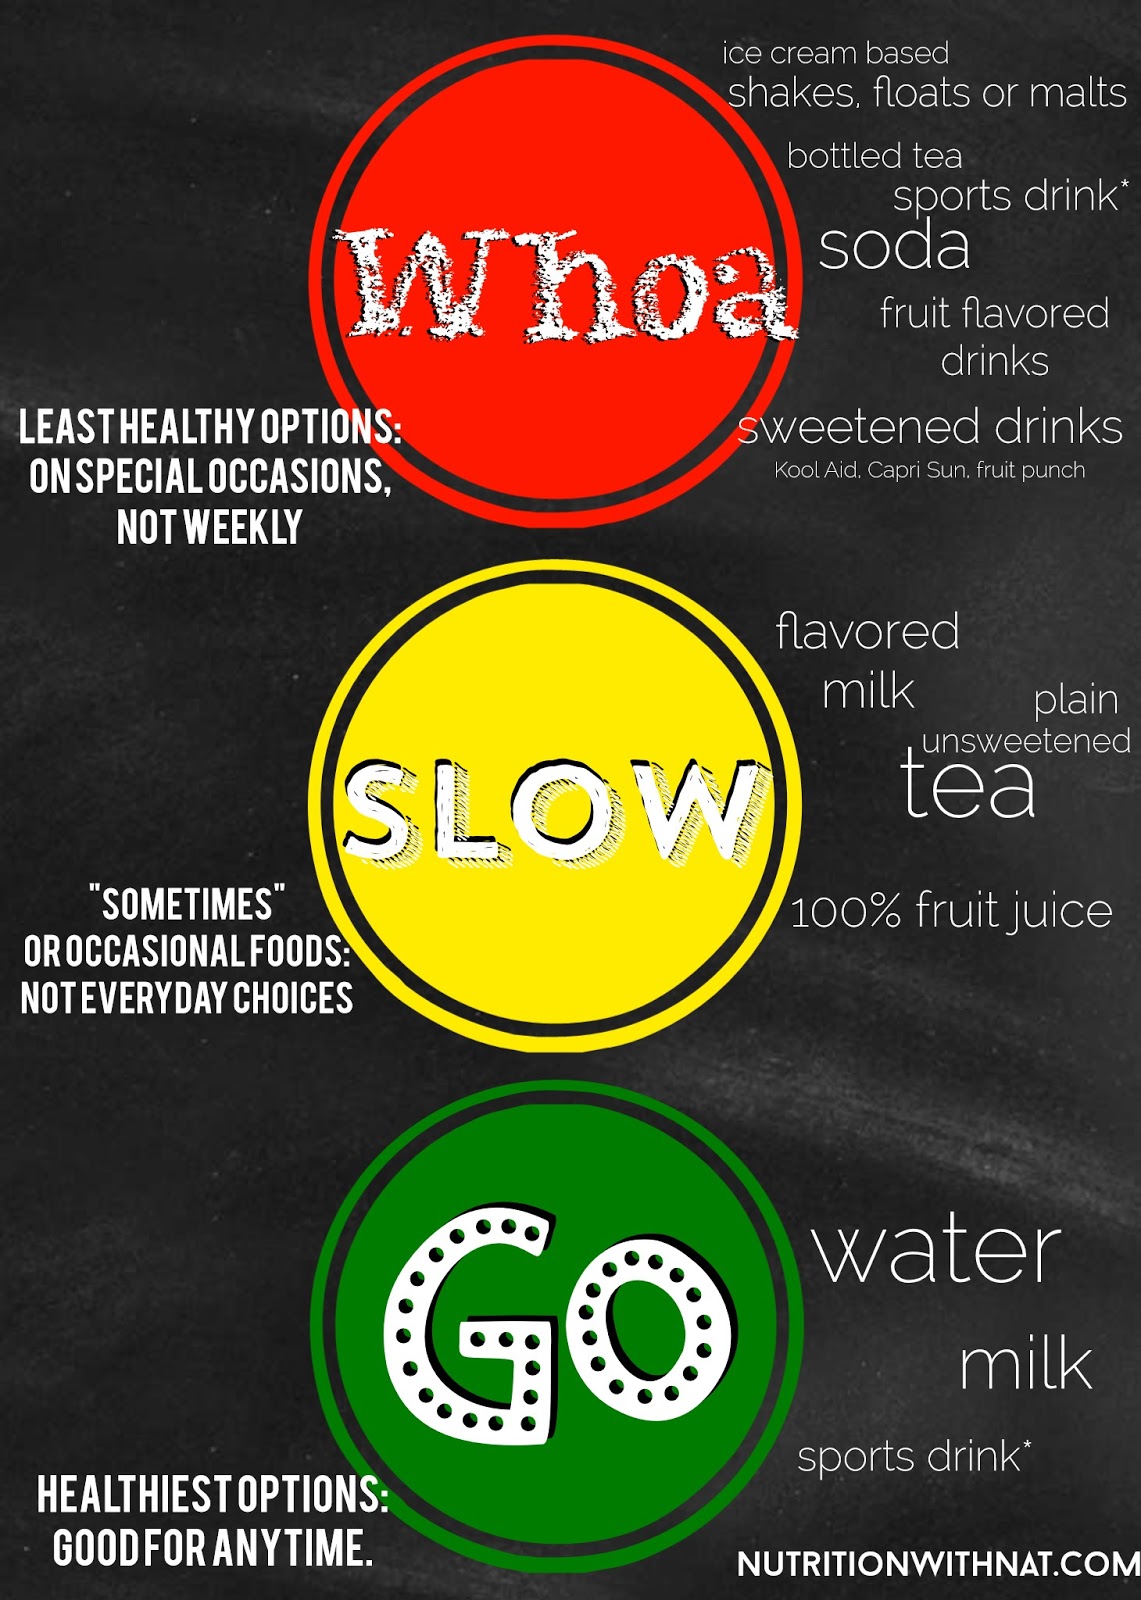 Go Slow And Whoa Foods Chart